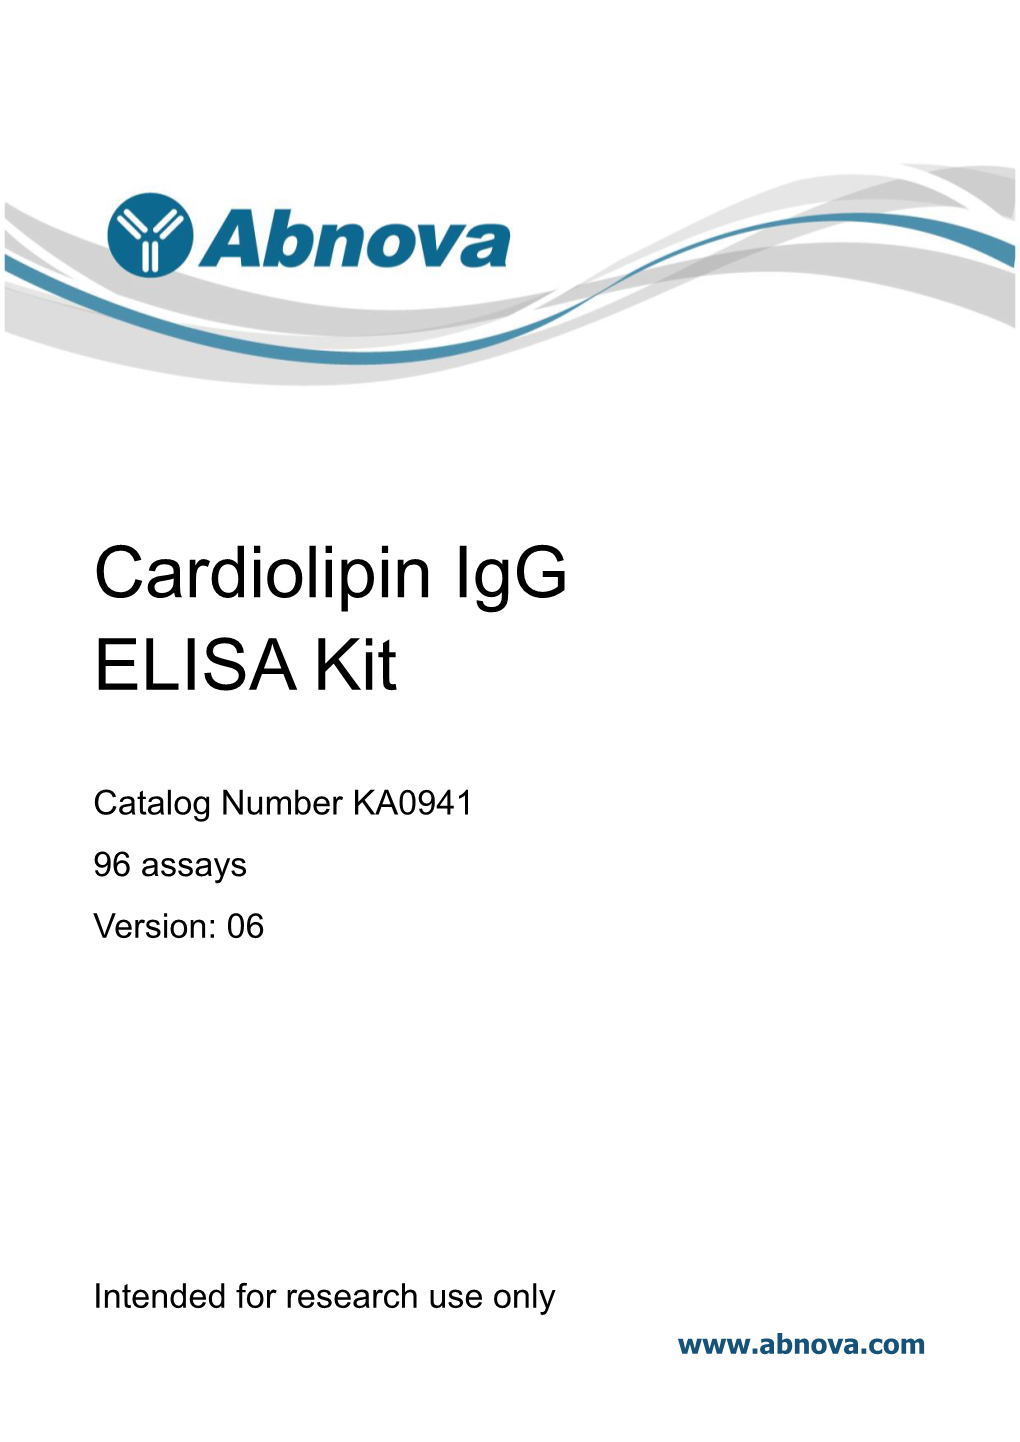 Cardiolipin Igg ELISA Kit